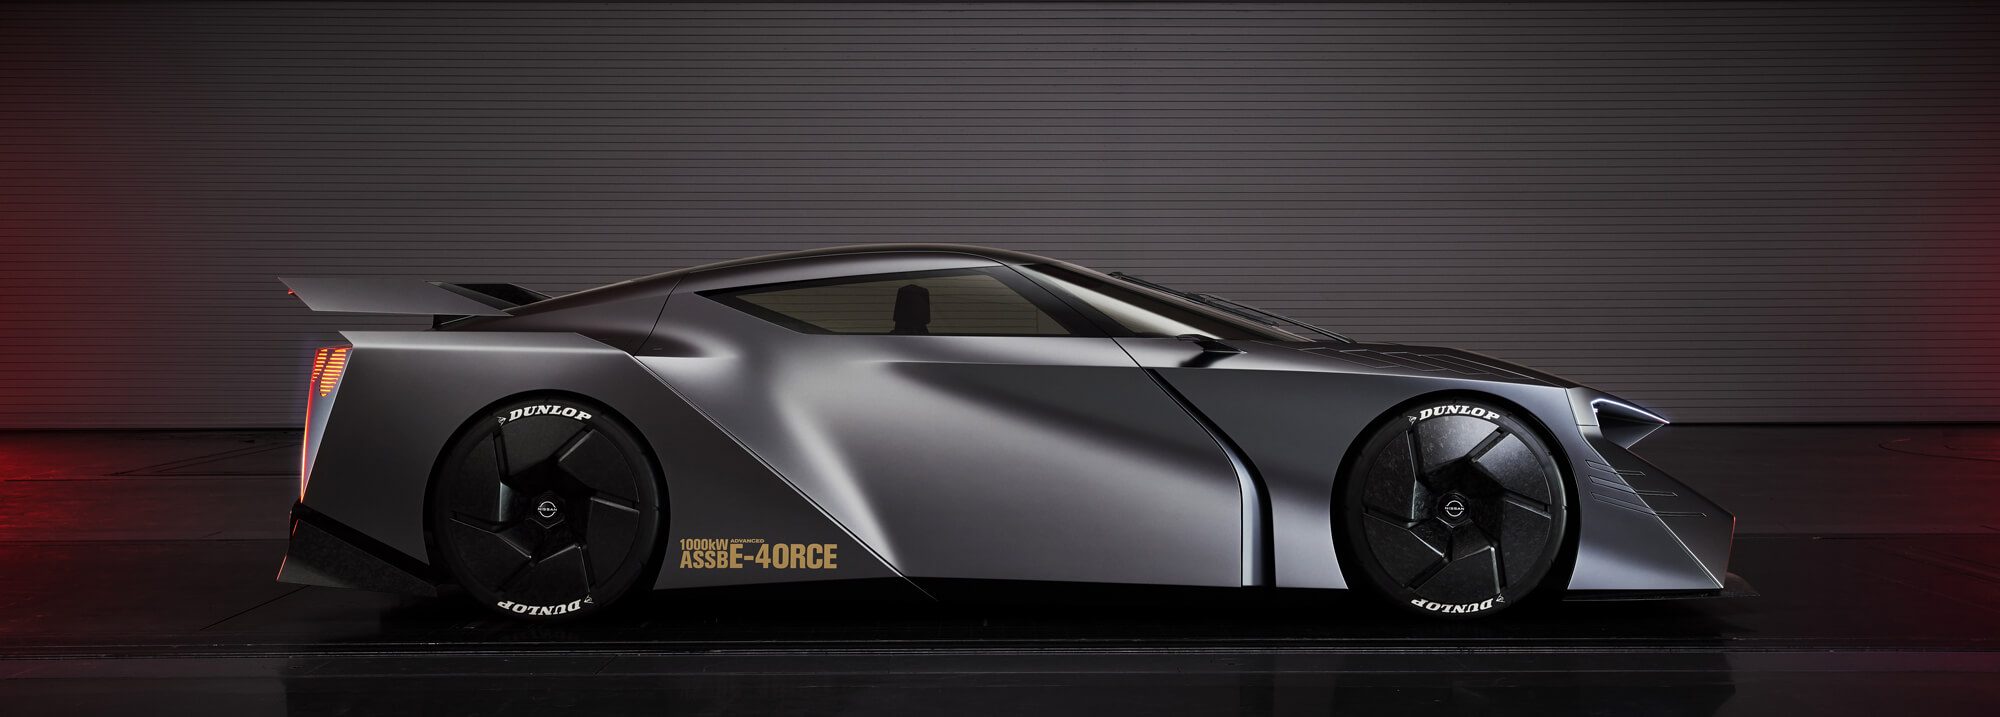 Nissan unveils Hyper Force concept video-banner